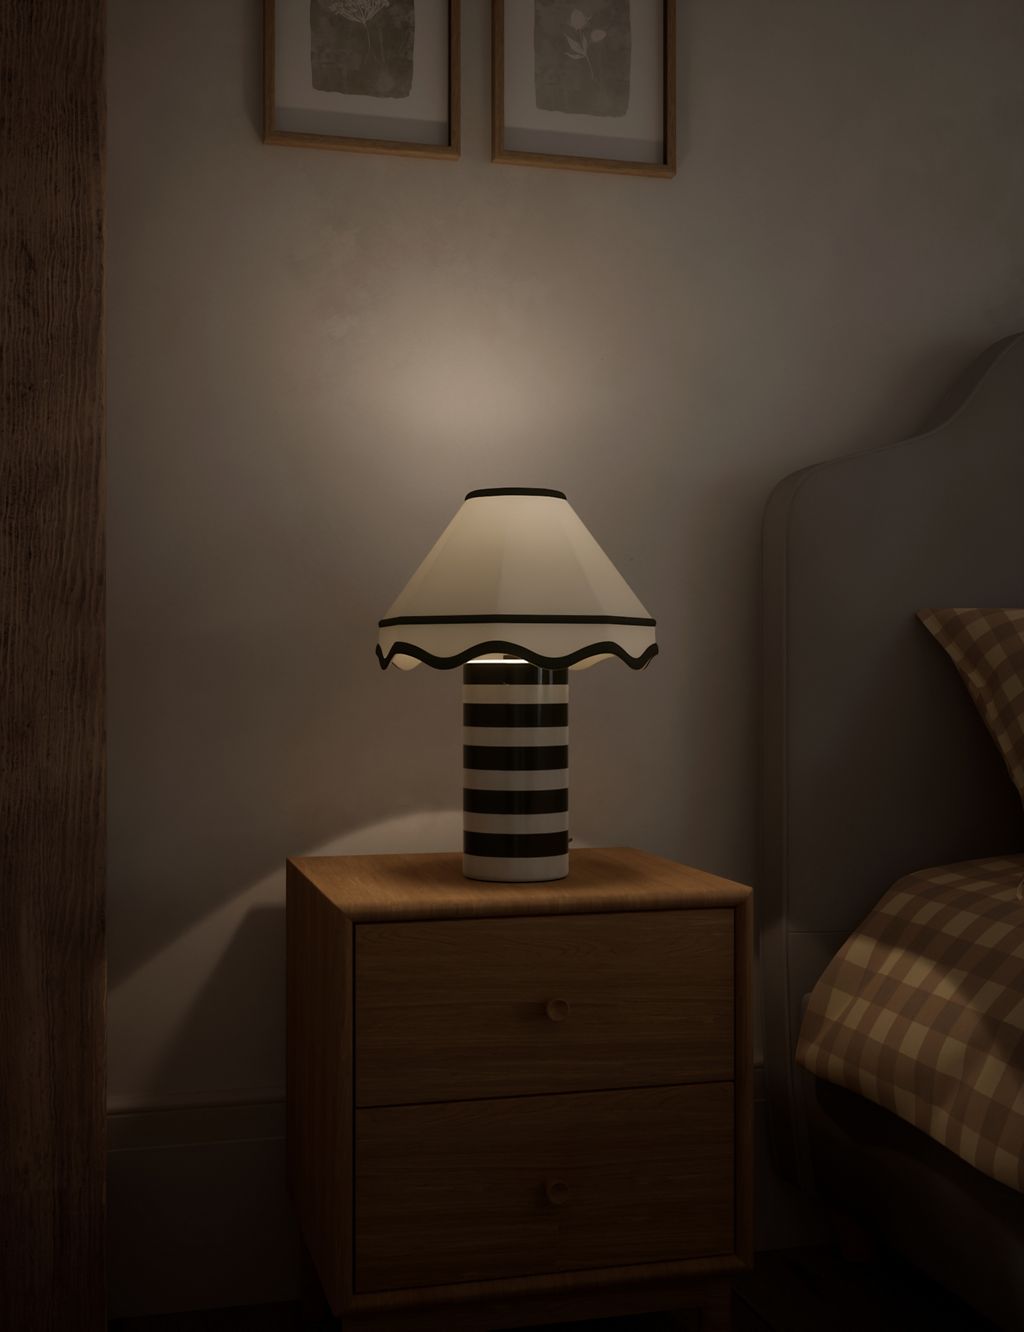 Hattie Striped Table Lamp 1 of 8